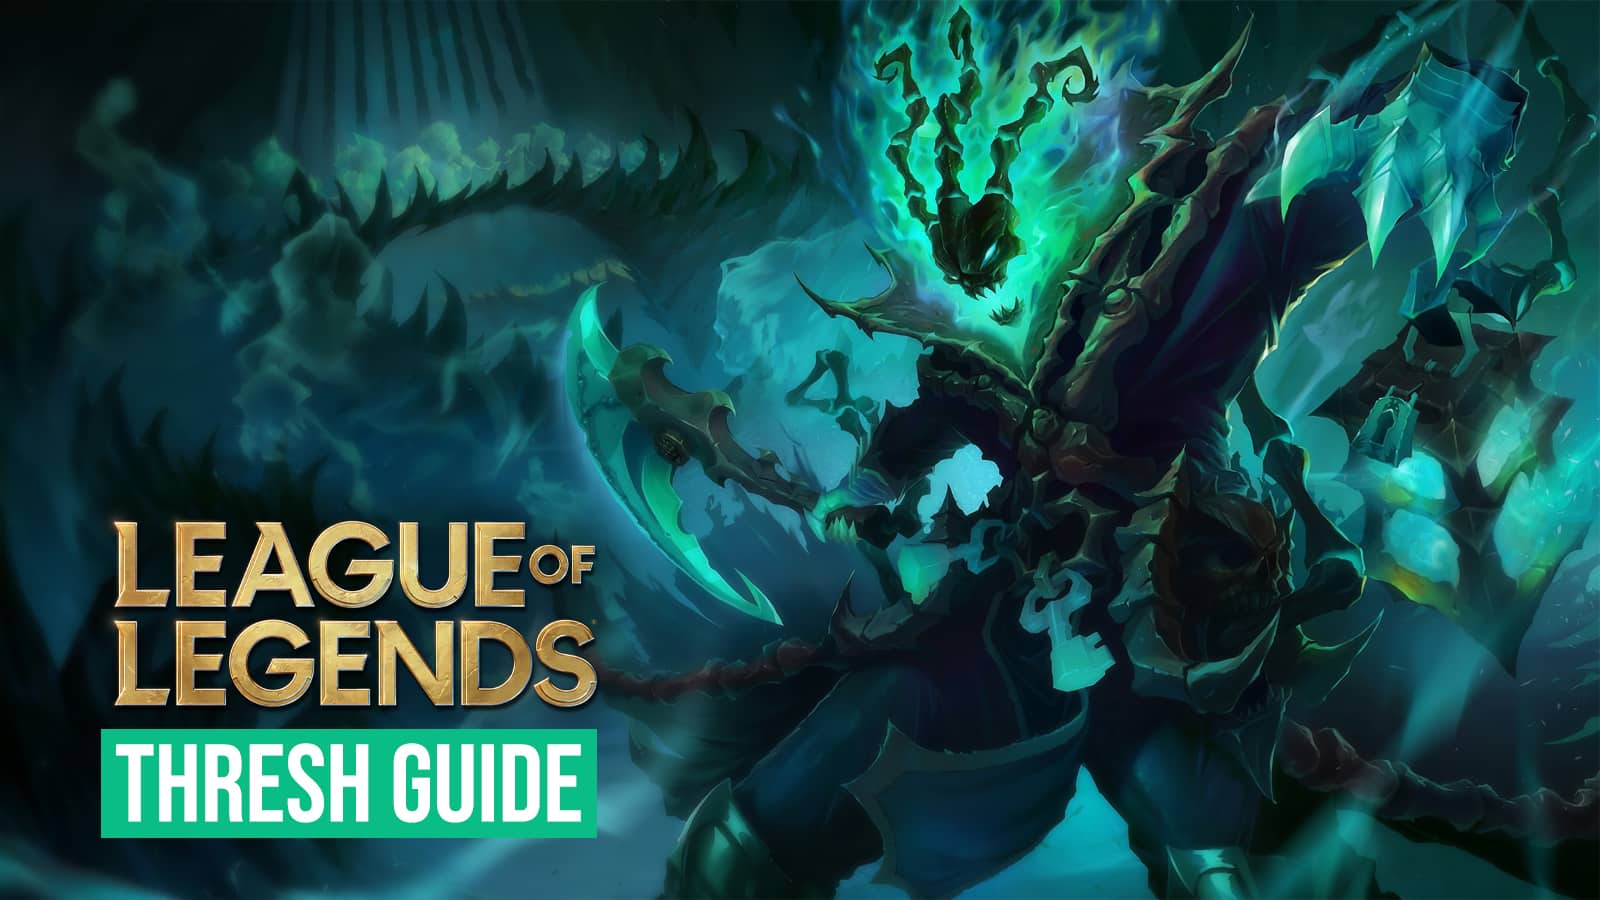 League of Legends Thresh guide best builds runes tips tricks skins